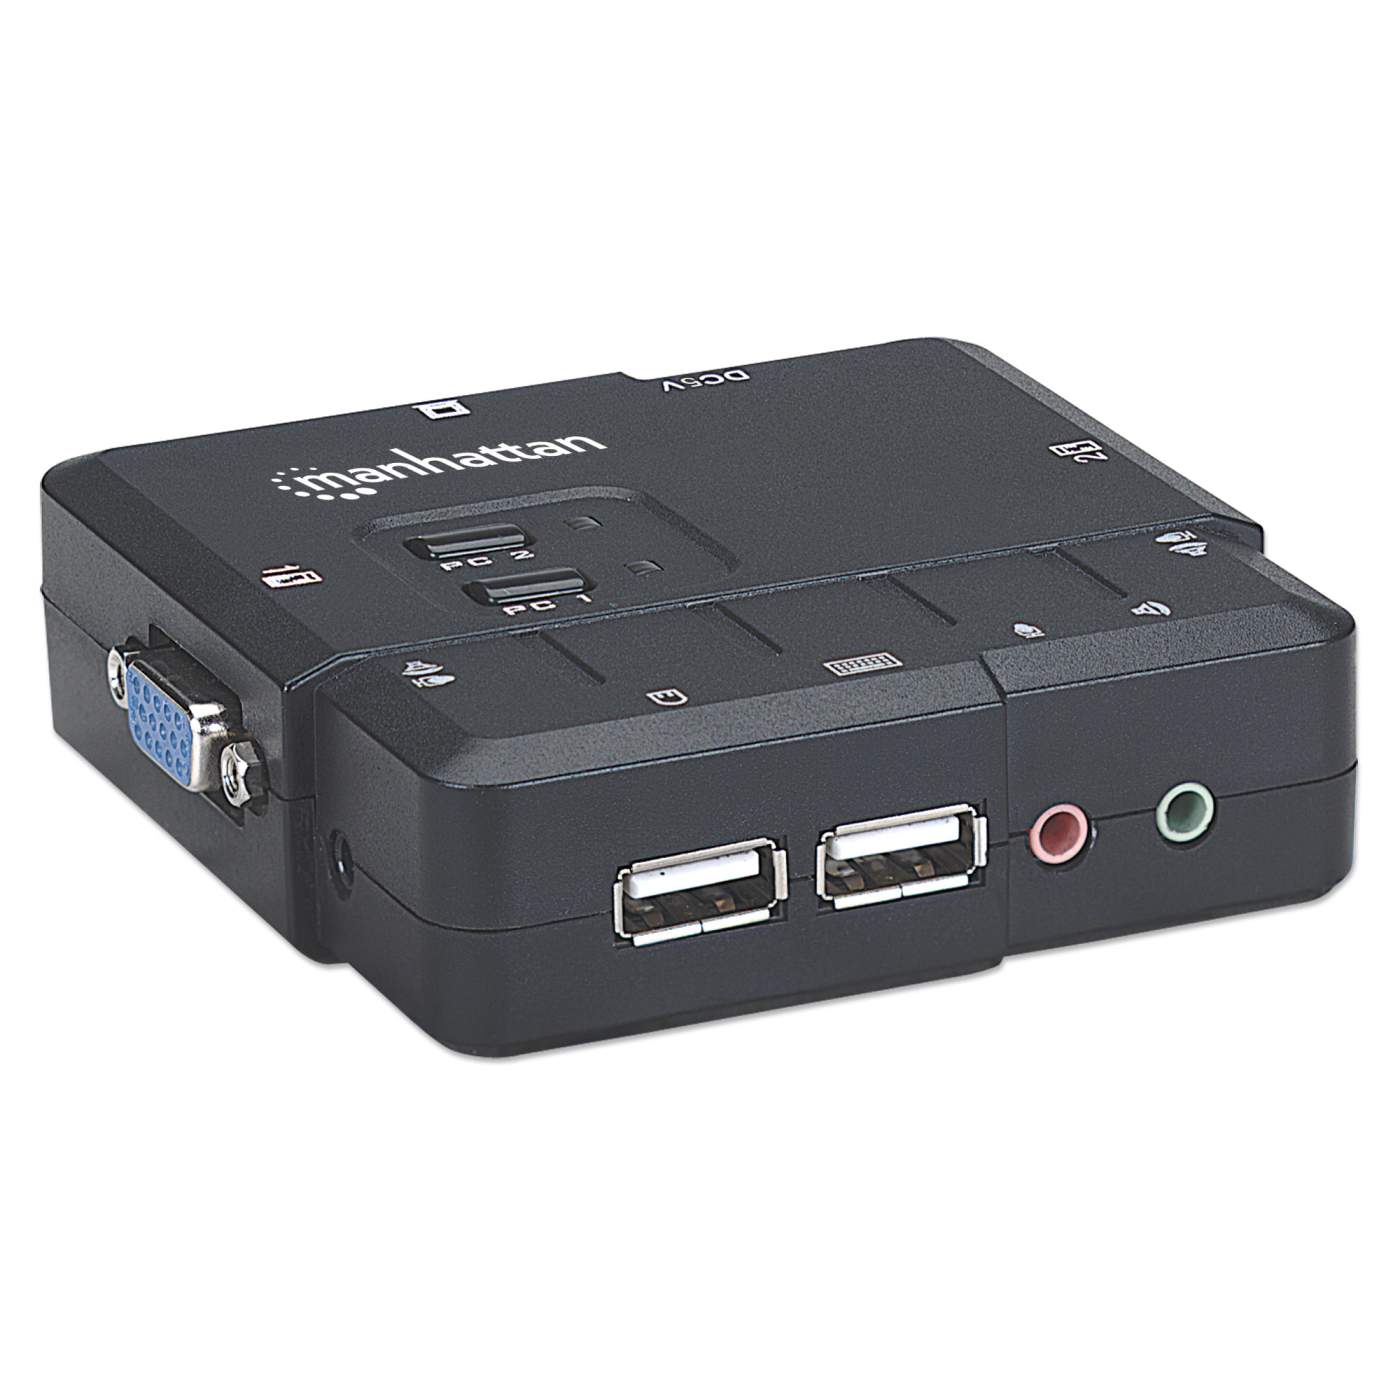  Lindy 2 Port Manual 4K DisplayPort Switch, 11x6.8x2.7cm, 38411  : Electronics